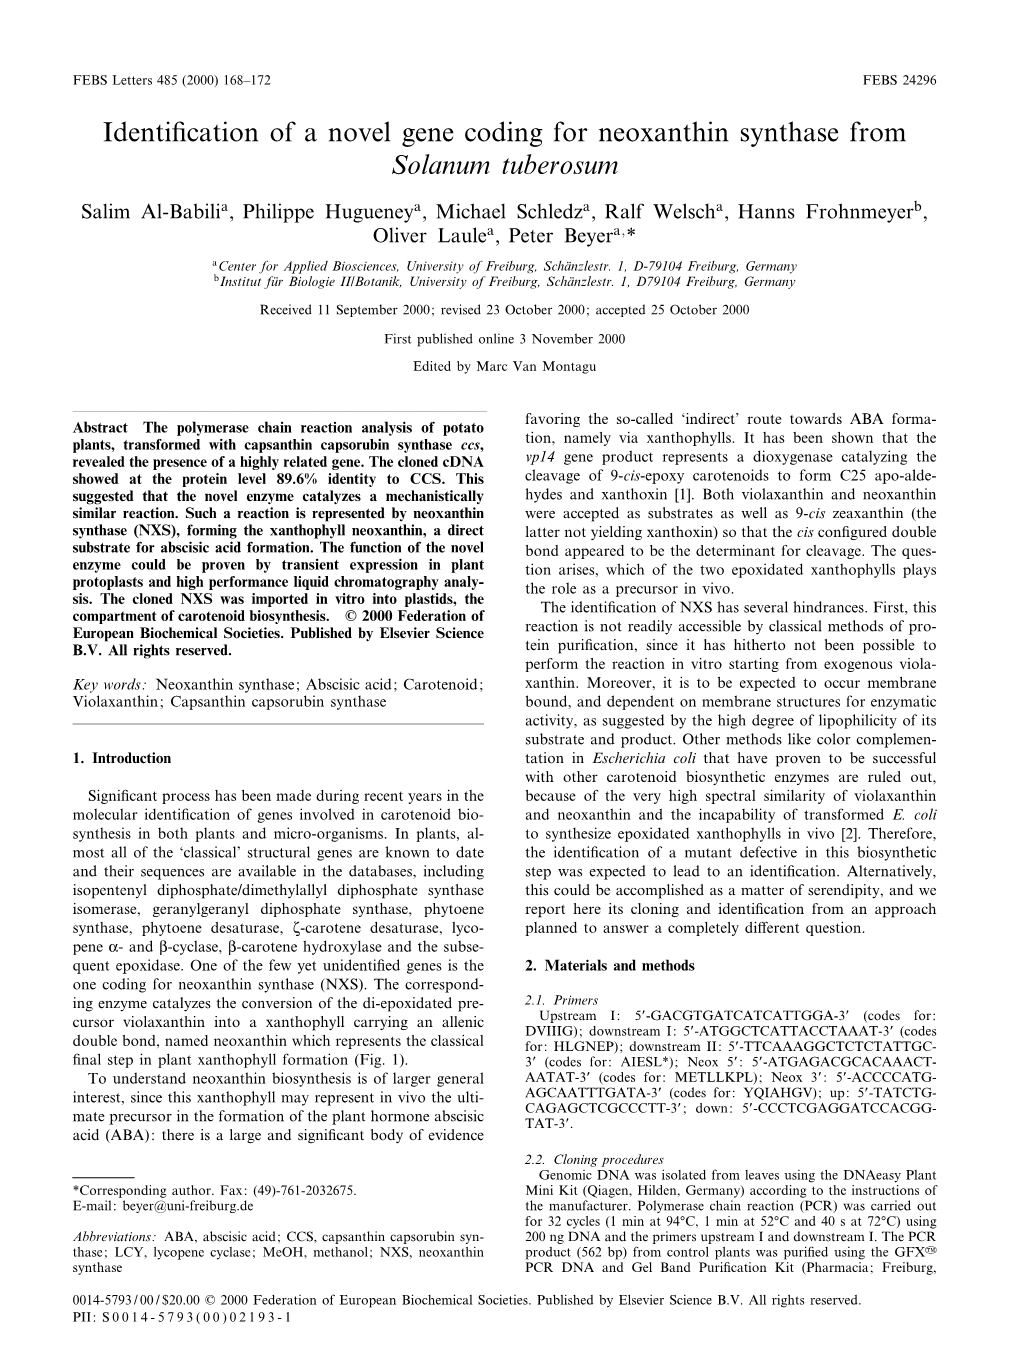 Identi¢Cation of a Novel Gene Coding for Neoxanthin Synthase from Solanum Tuberosum